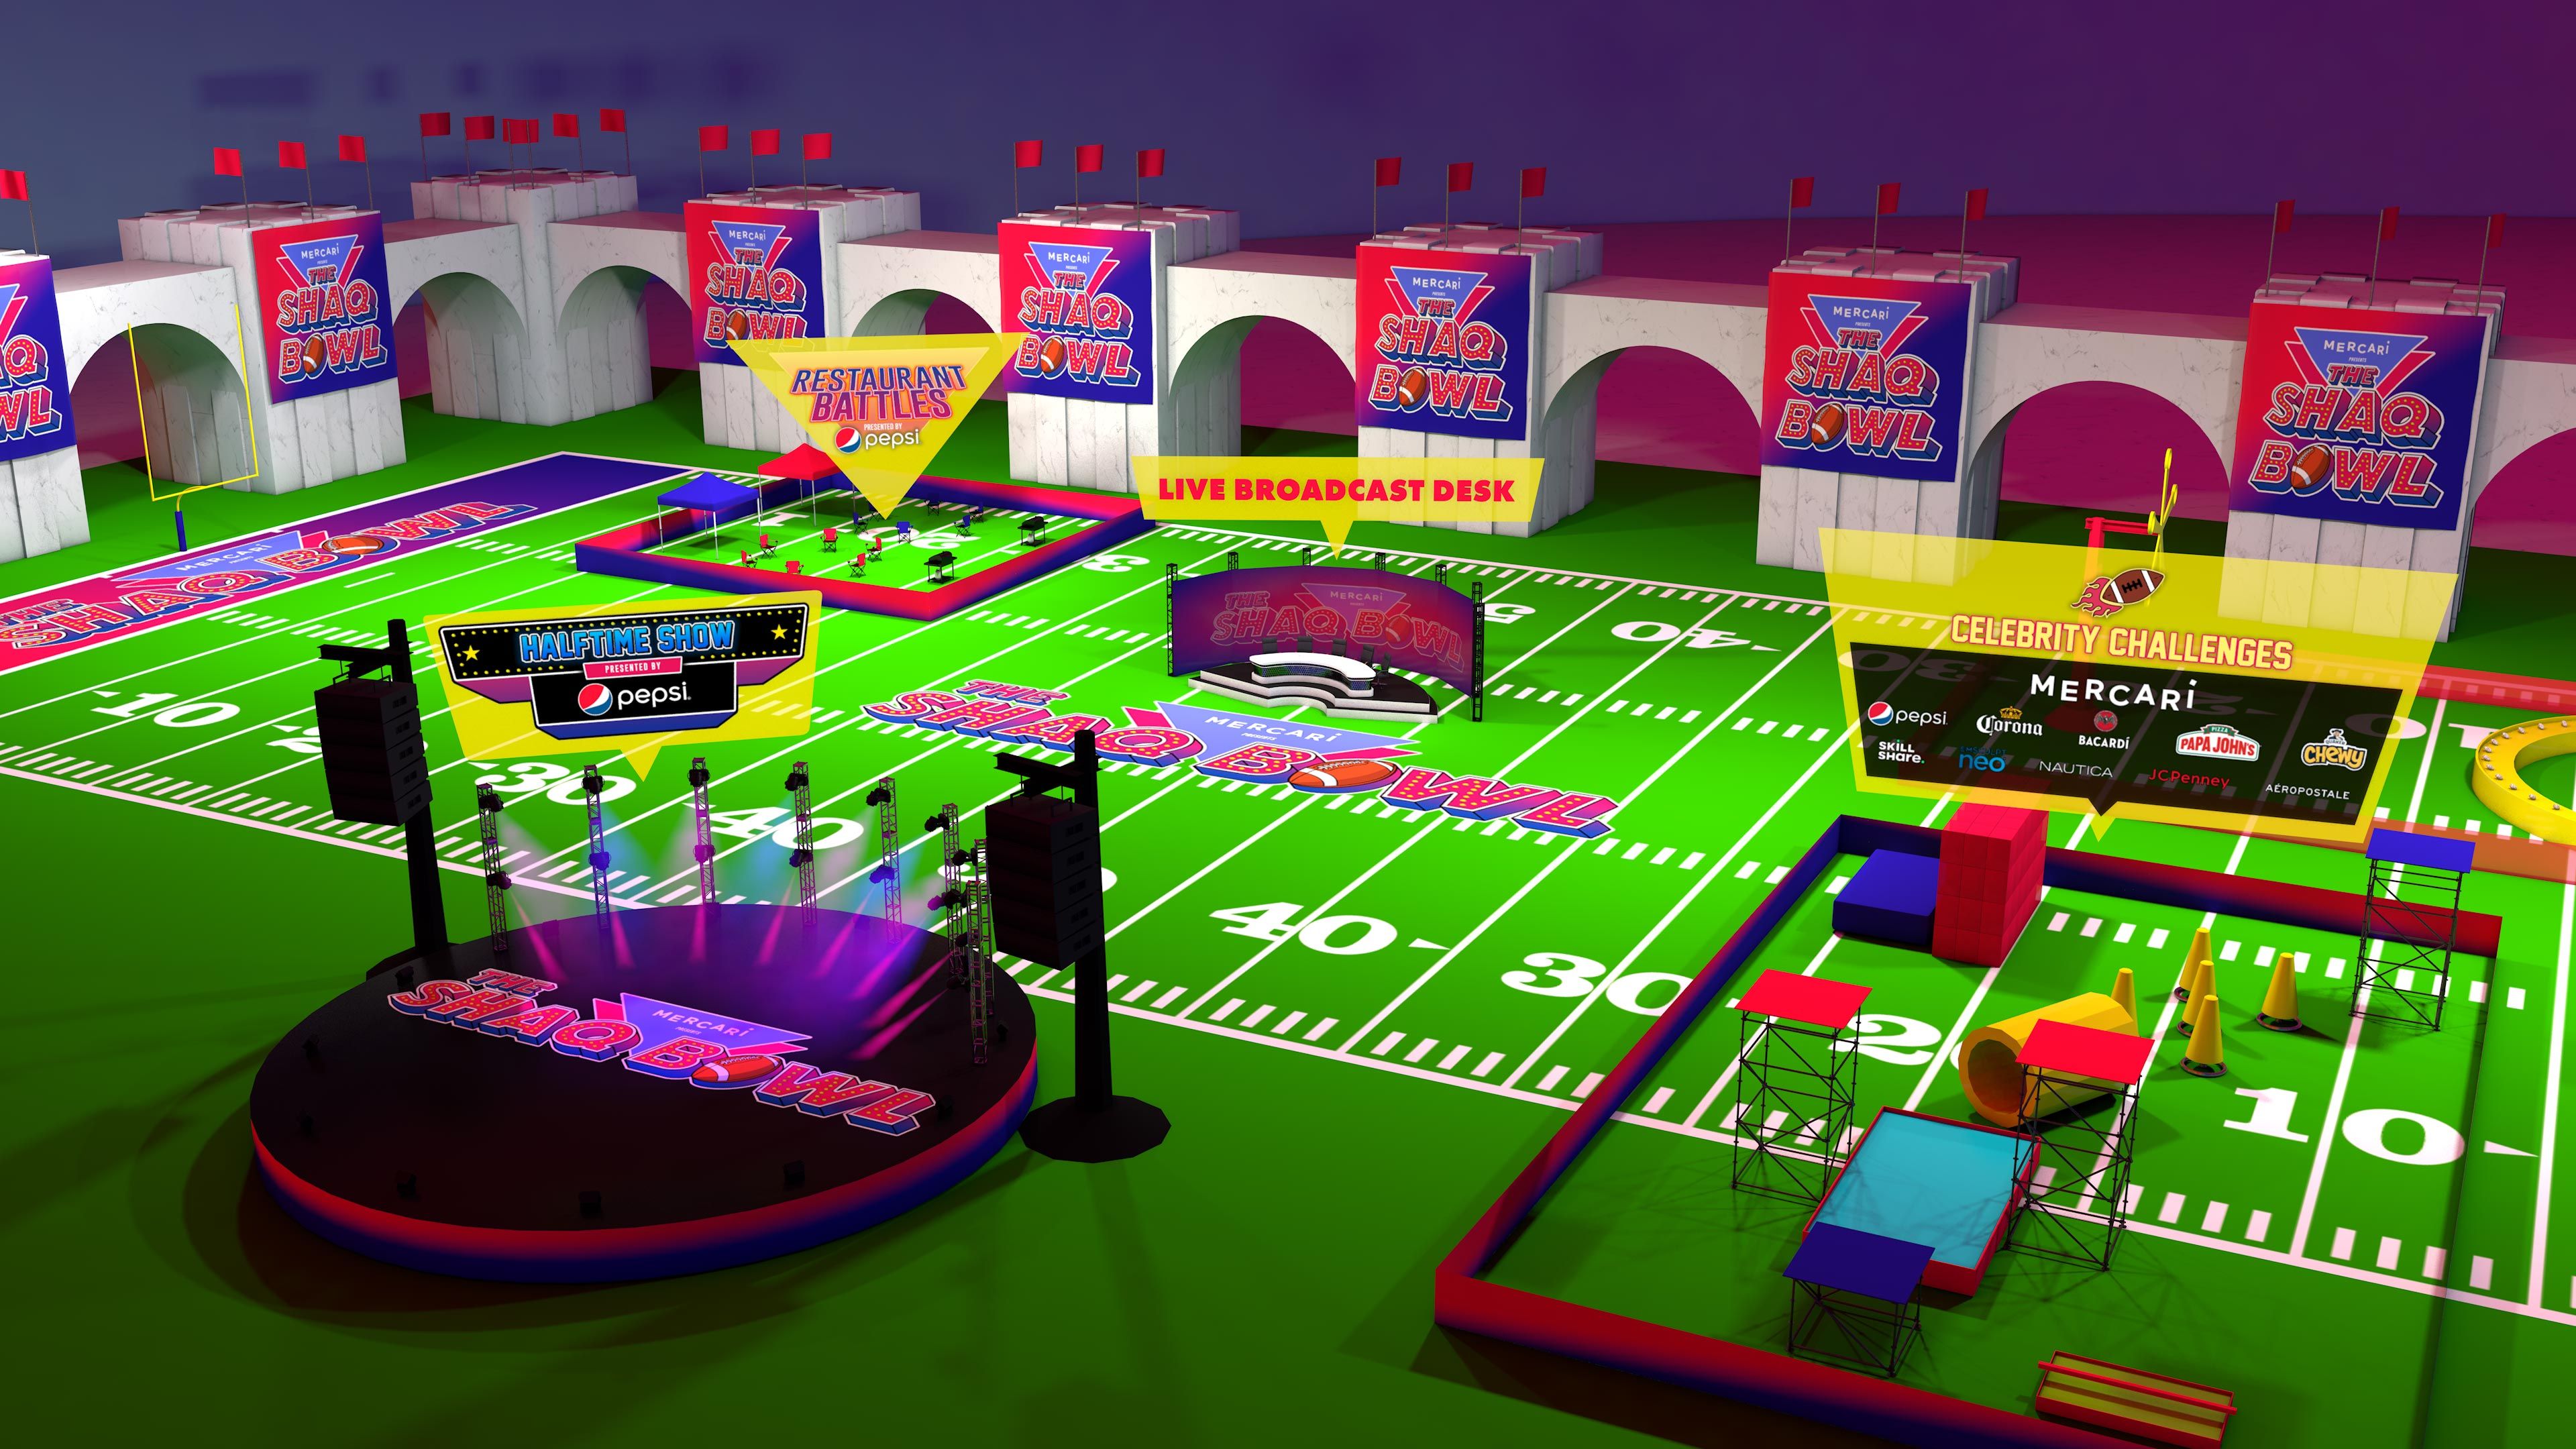 Our Super Bowl LV (55) 2021 Party Plans - A Reel Cinema @ Home